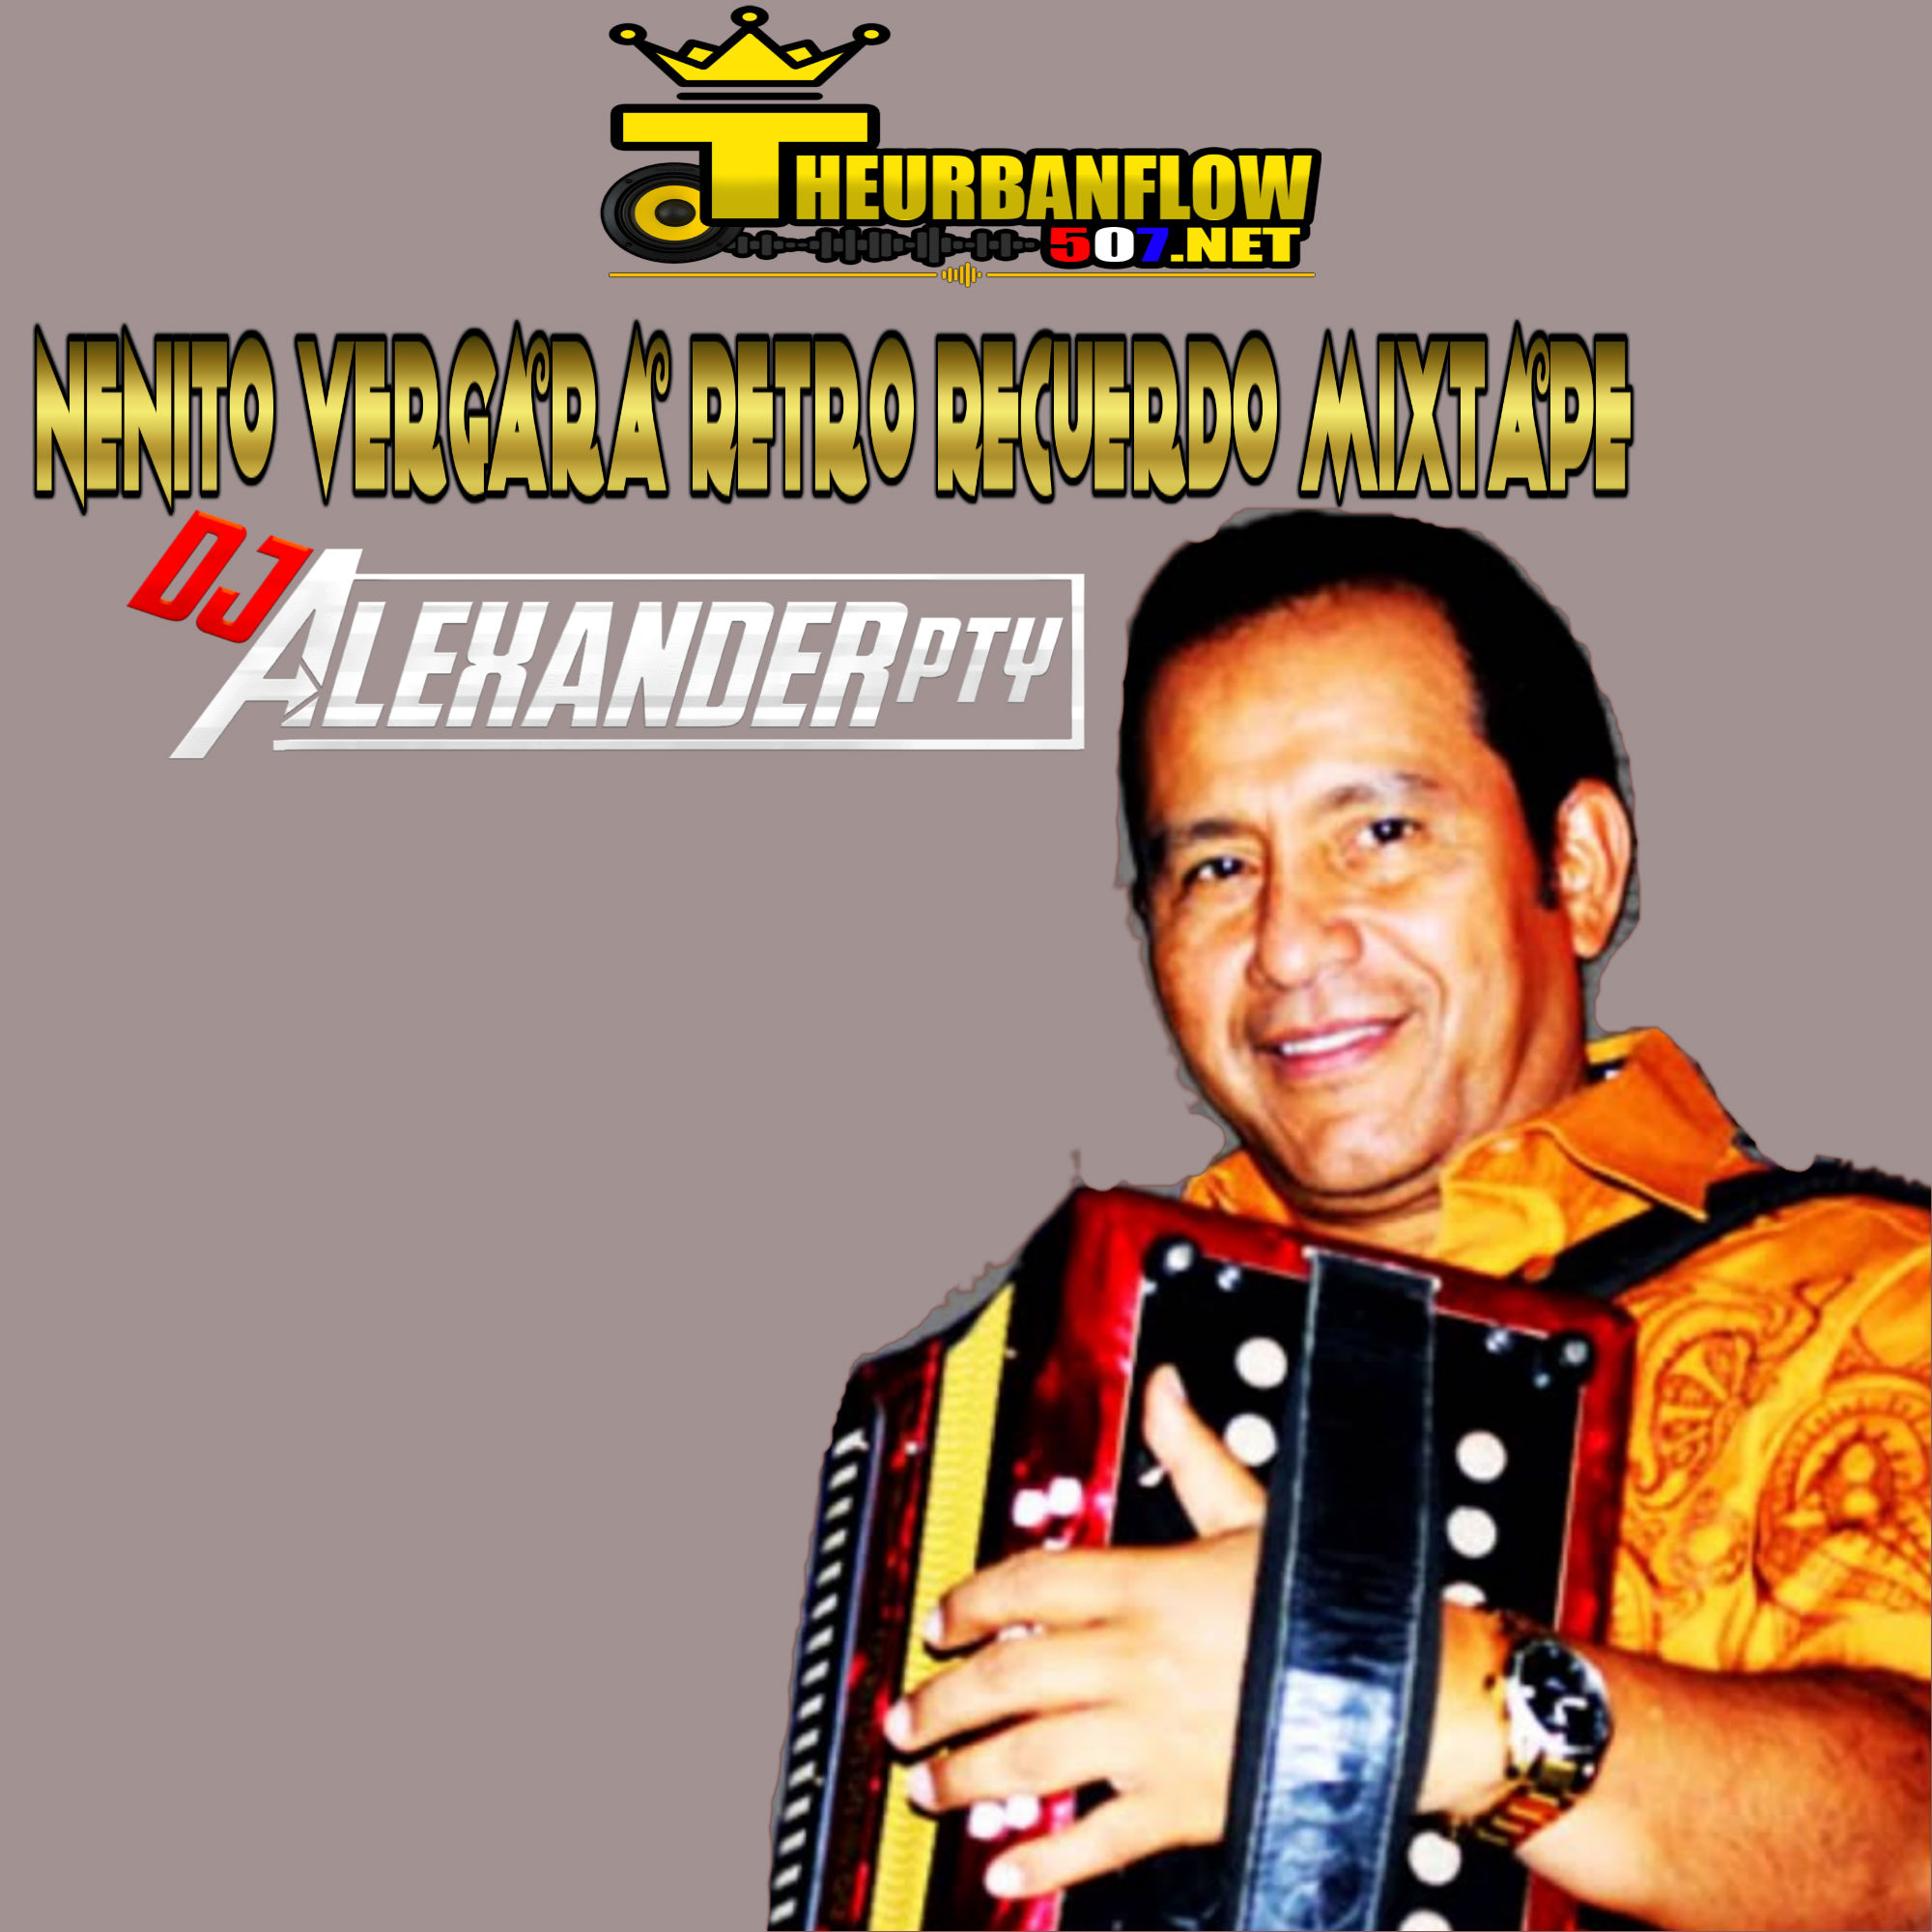 Nenito Vergara Retro Recuerdo Mixtape -@DjAlexanderpty